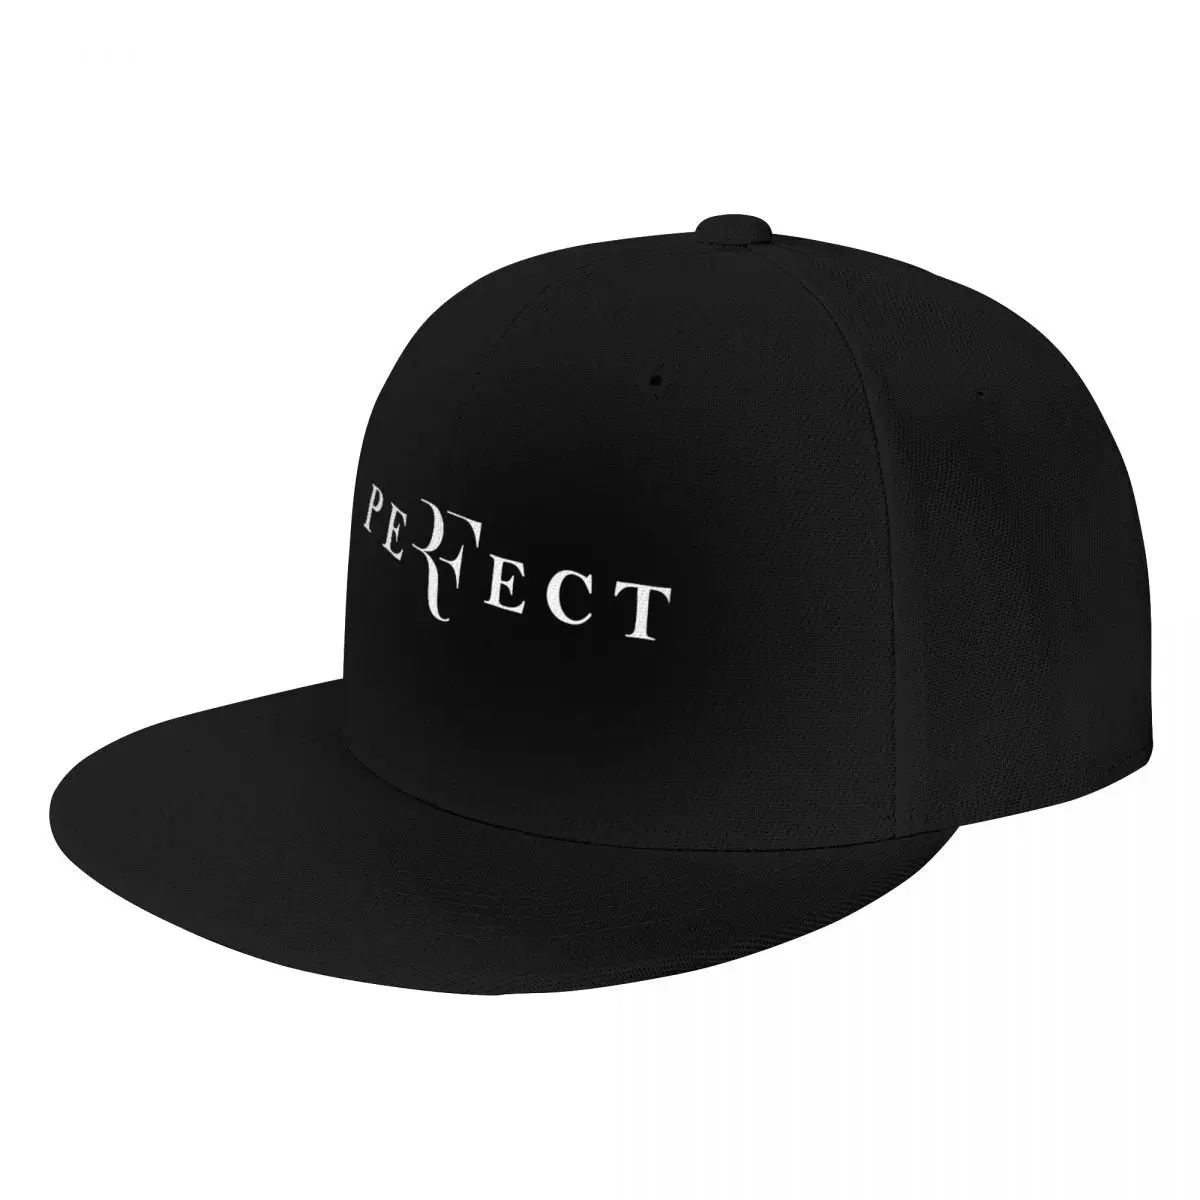 

RF Perfect Baseball cap Hip-hop Hats Outdoor Adjustable Casual Sunscreen Hats